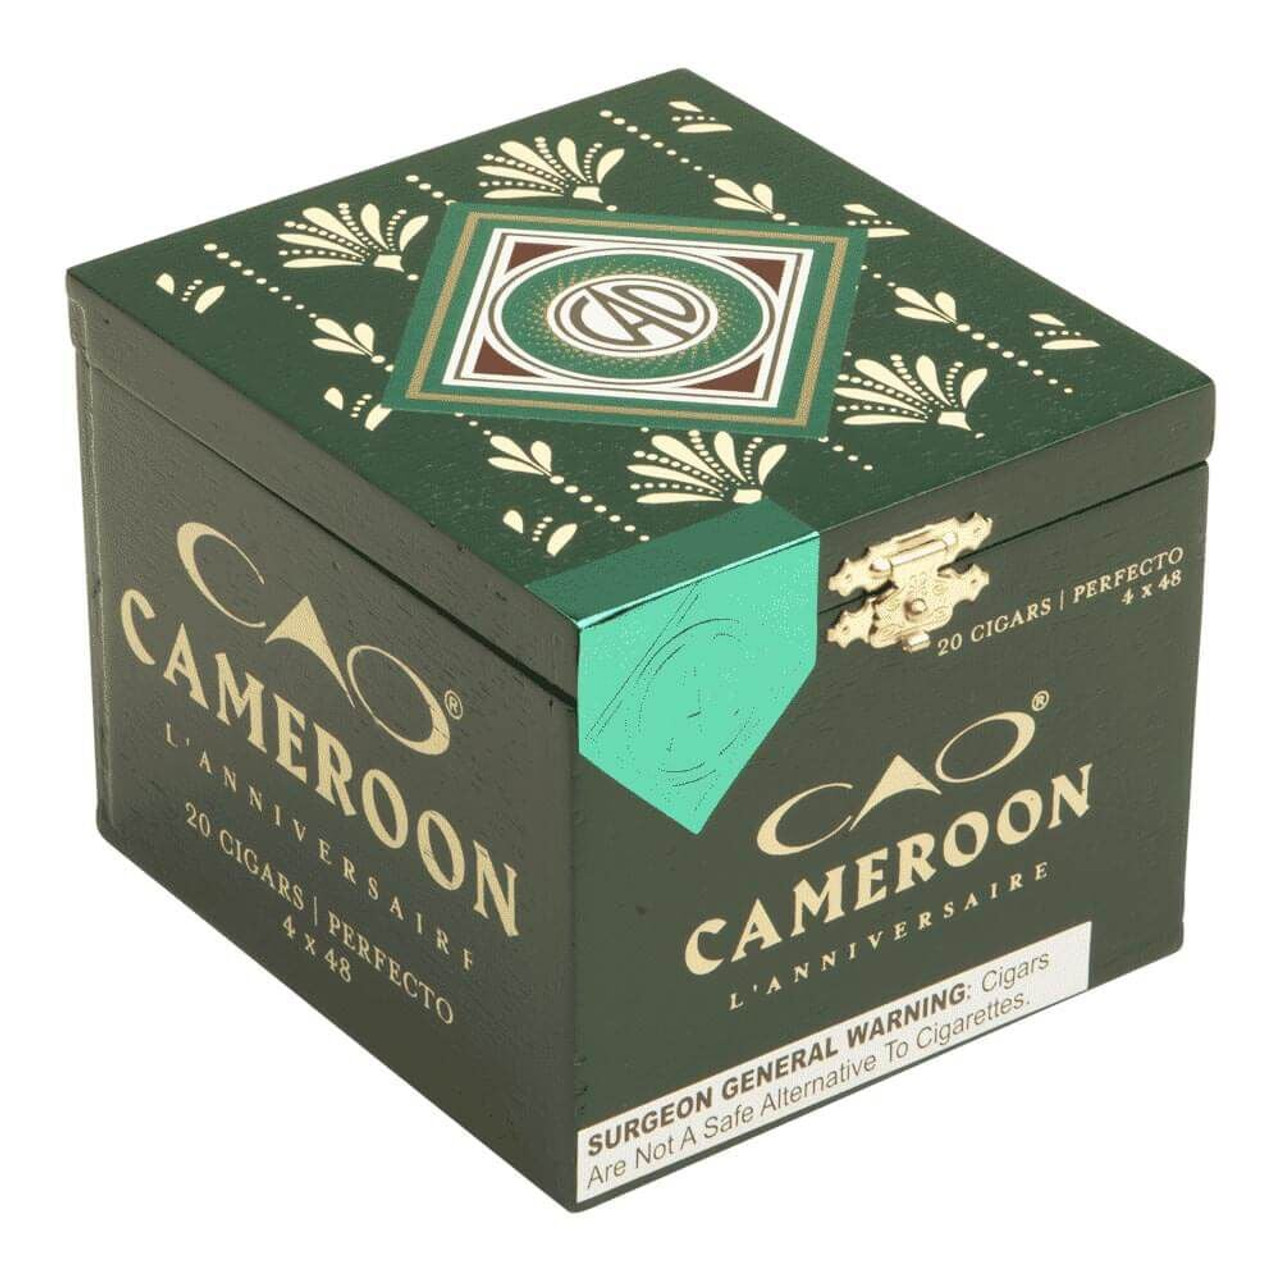 CAO Cameroon Perfecto Cigars - 4 x 48 (Box of 20) *Box